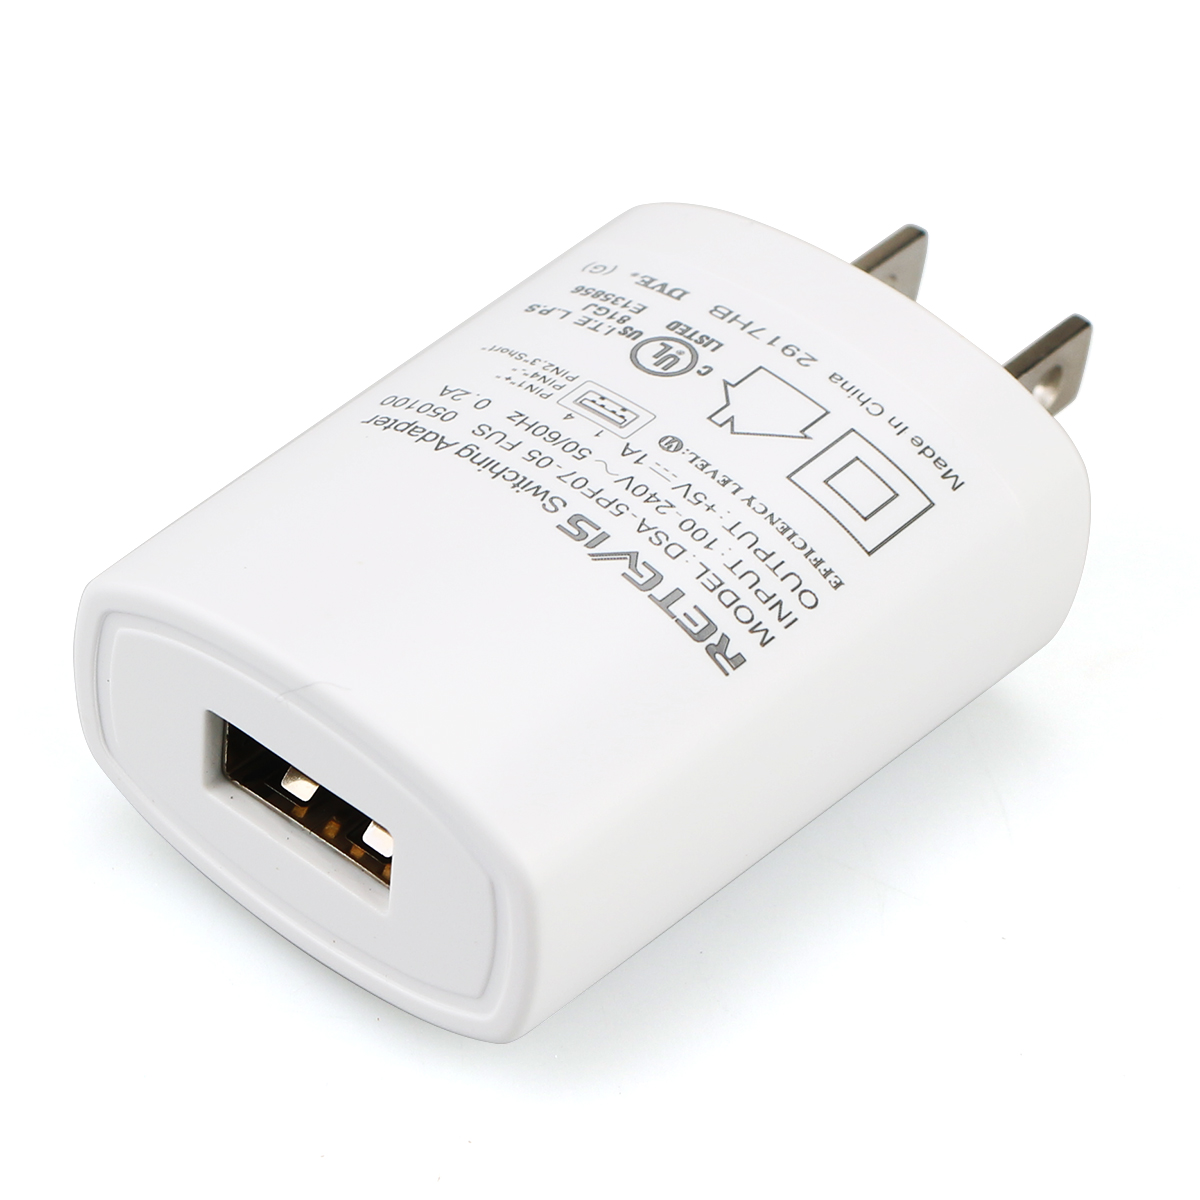 White Universal 5V 1A USB AC Power Adapter US